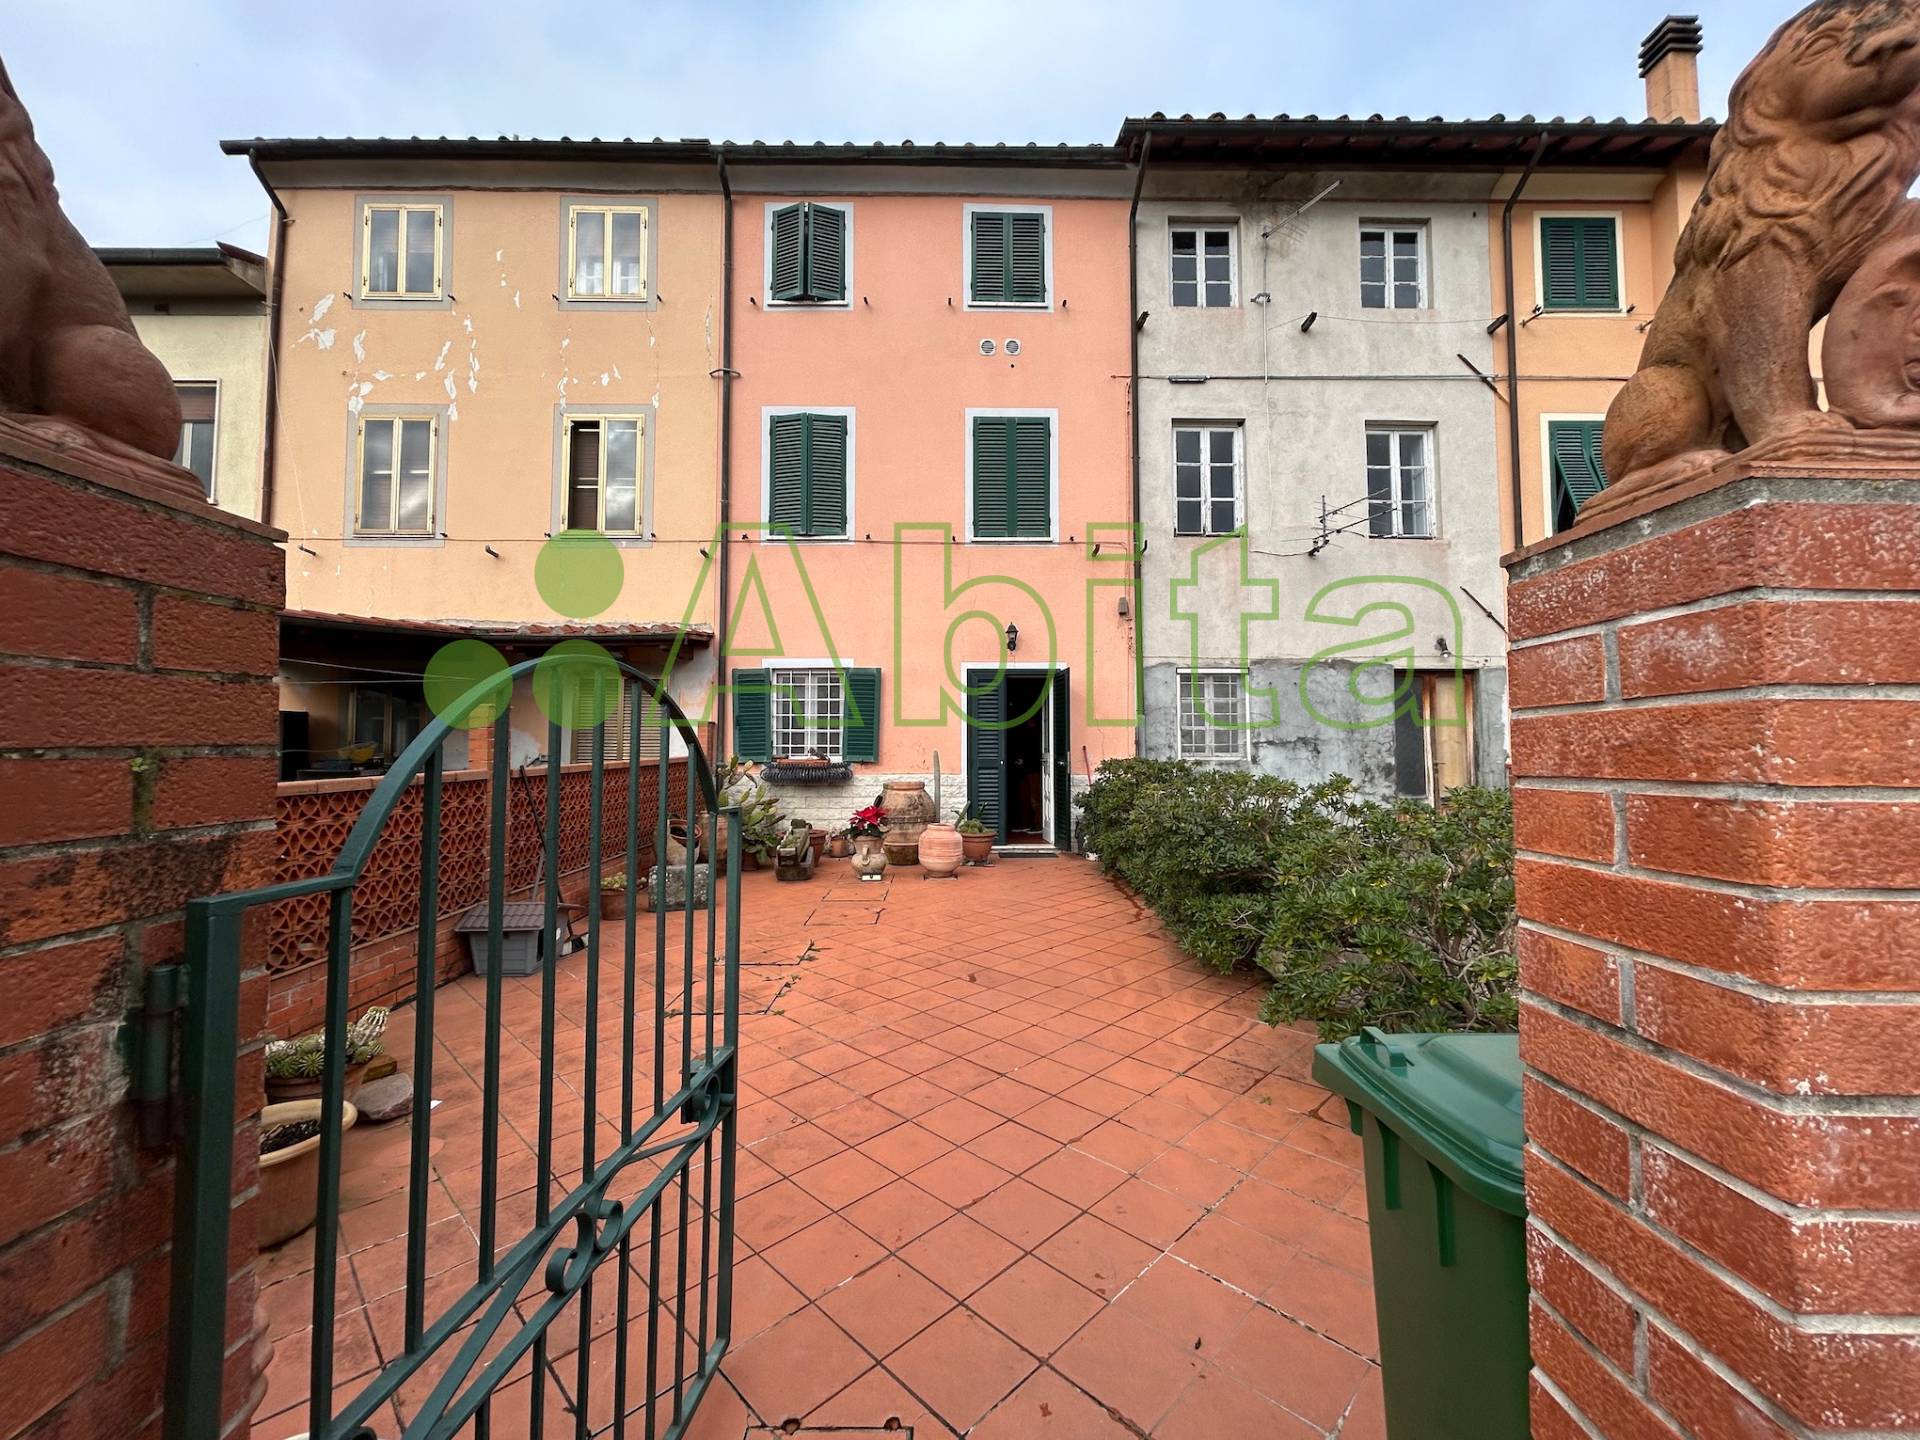 Rustico in vendita a Sant'alessio, Lucca (LU)